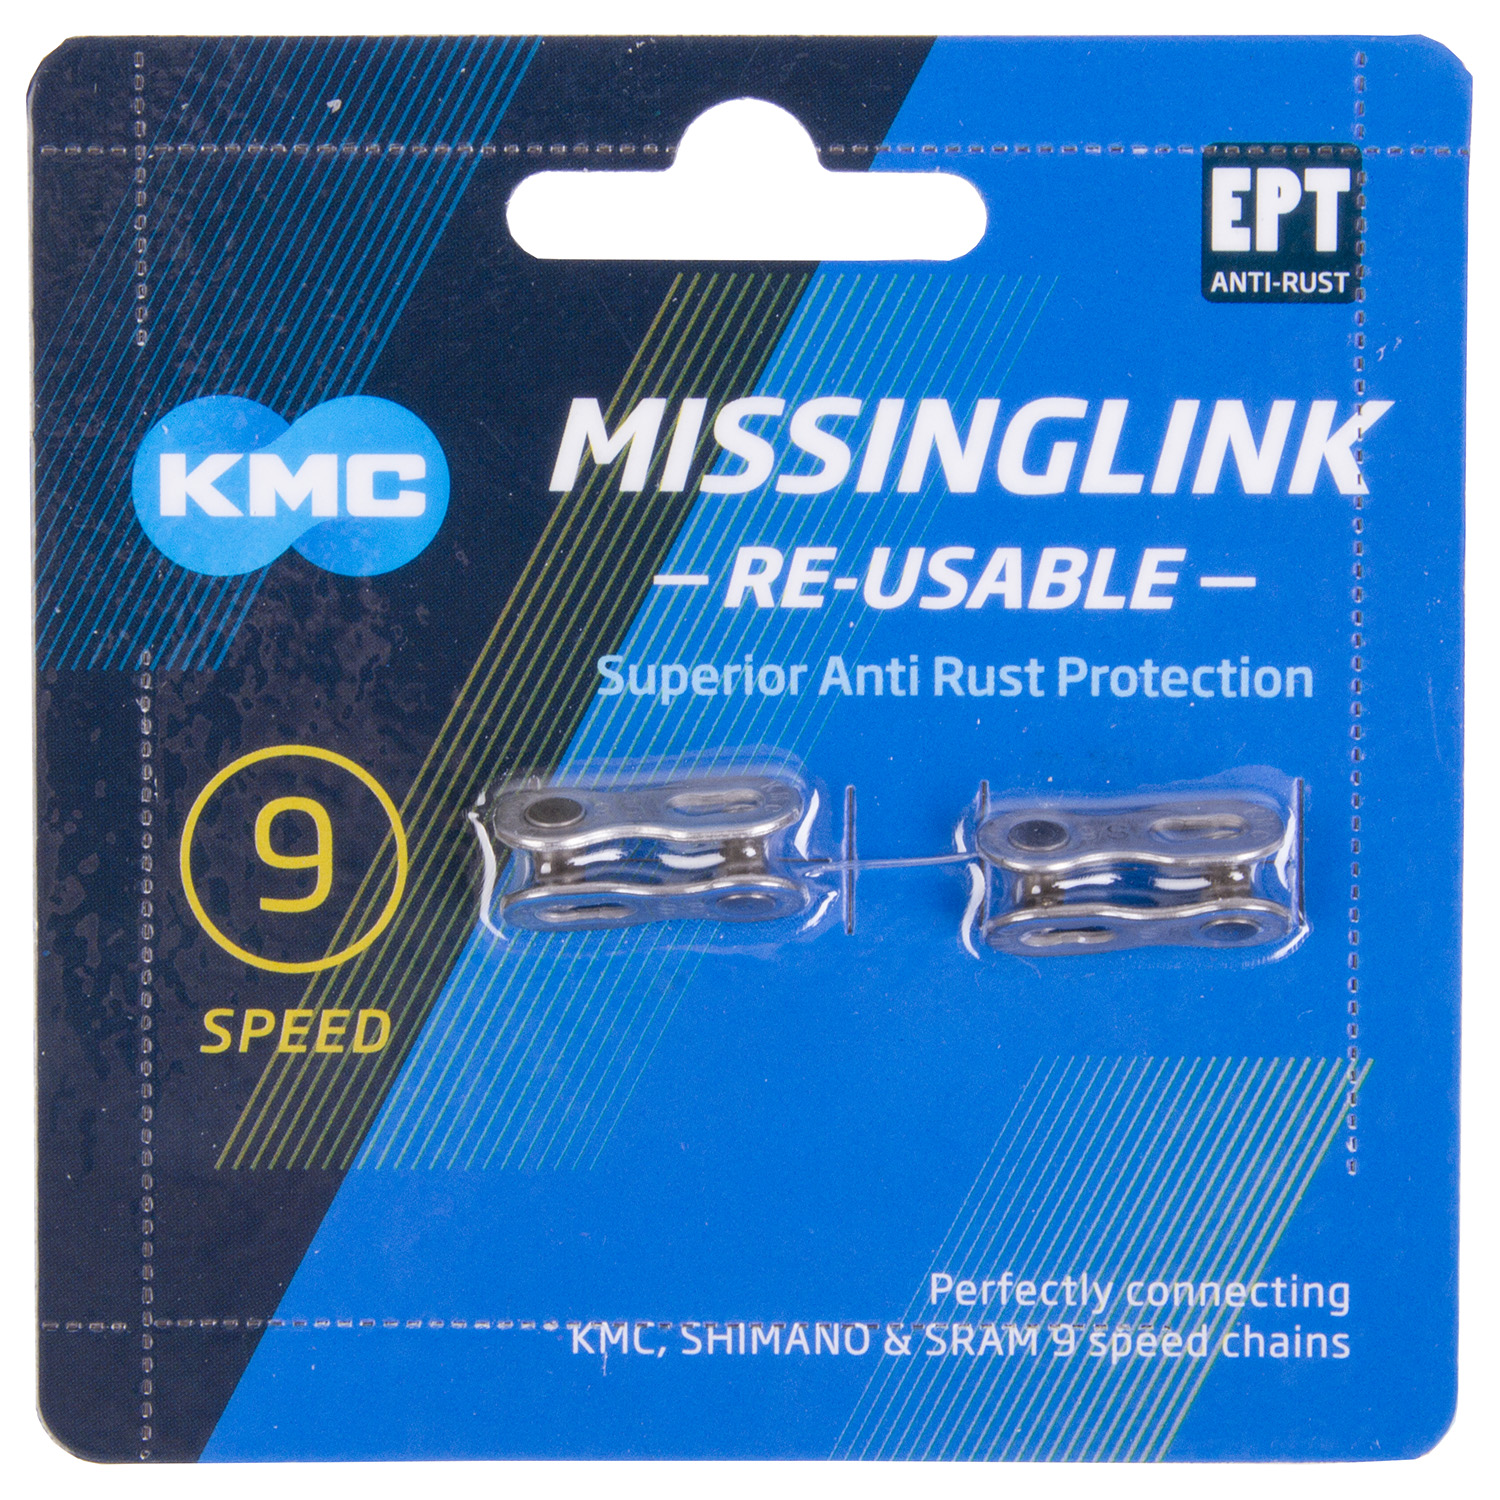 KMC 2er-Set 9-fach EPT Bolzenlänge 6,6 mm MissingLink SB verpackt